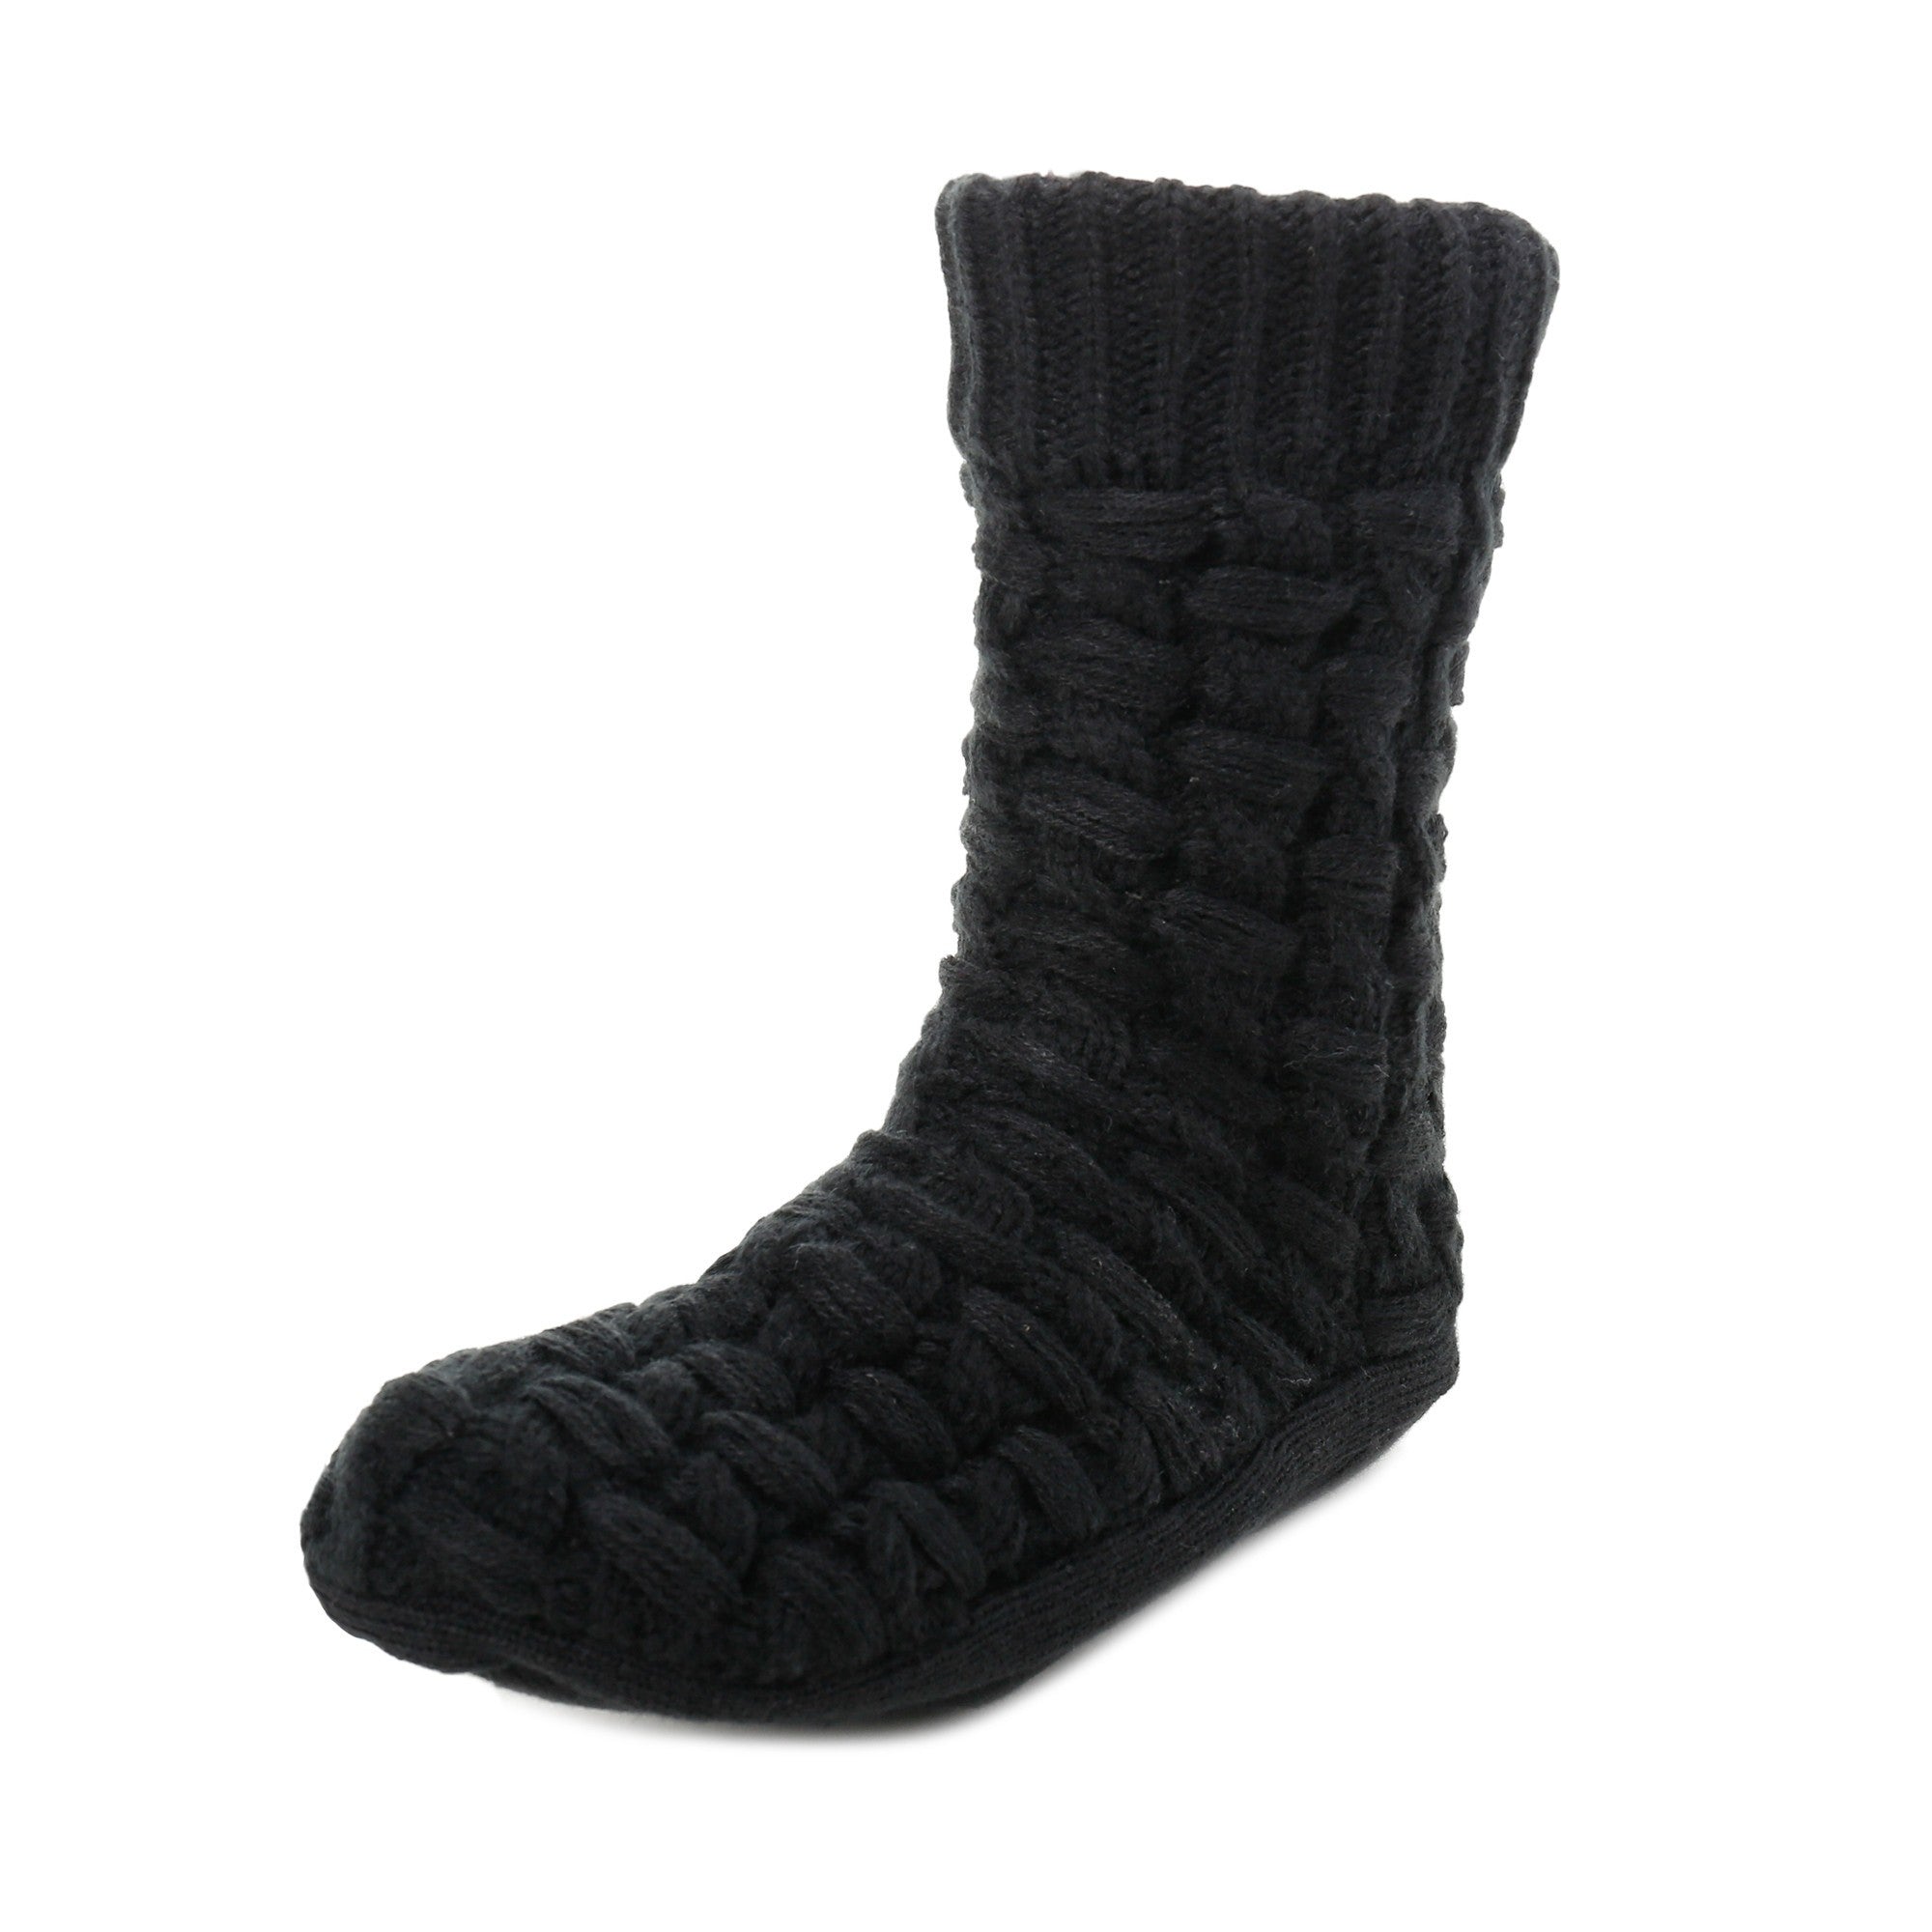 Men's Thick Basket Weave No-Skid Slipper Socks